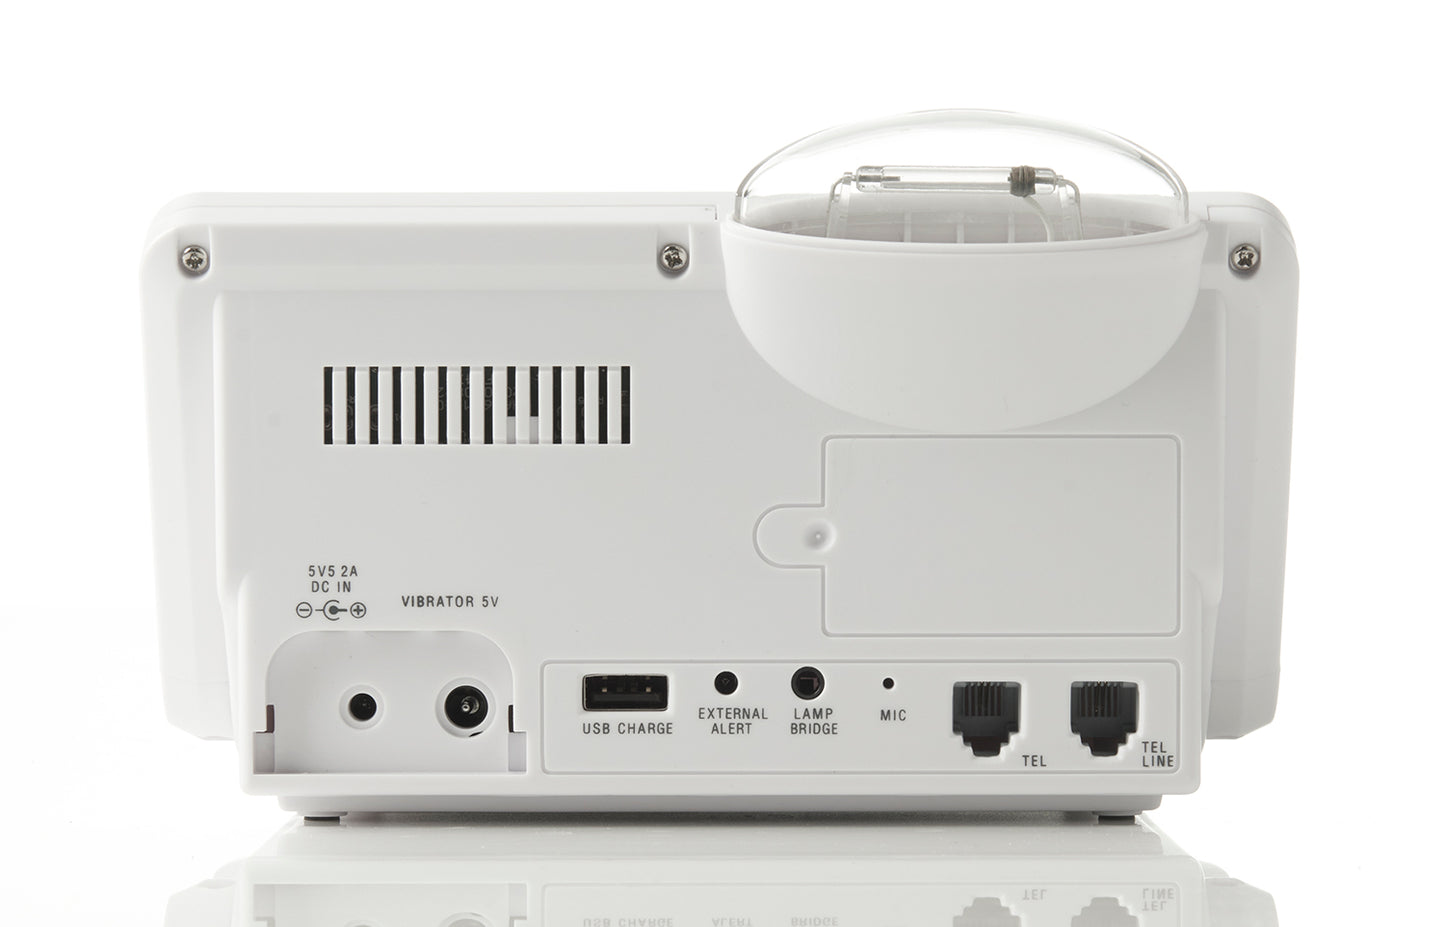 The HomeAware II HA360M-II Signaling Hub with built in Smoke/CO